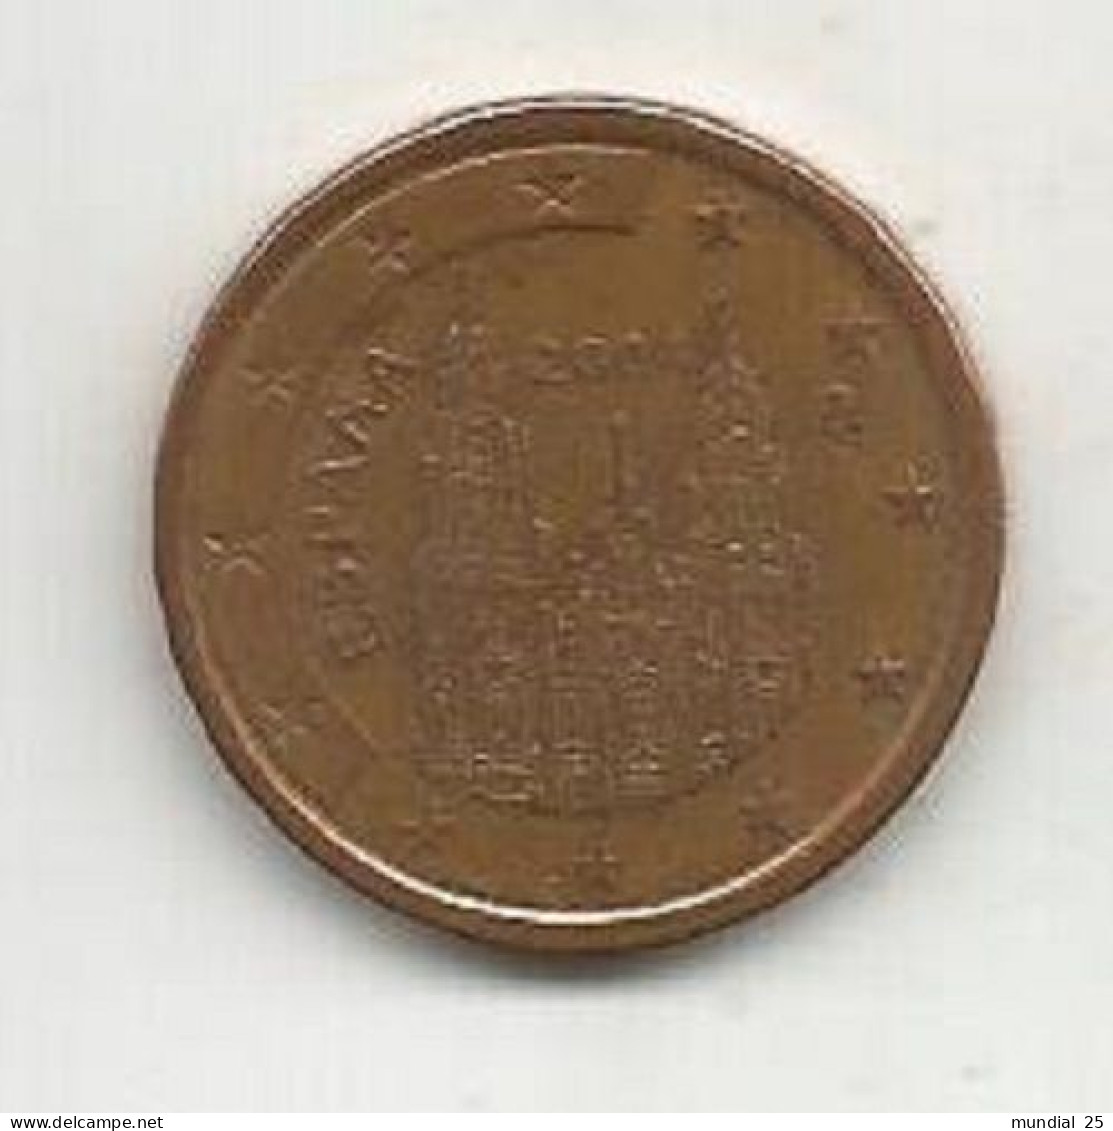 SPAIN 5 EURO CENT 2004 - Spain